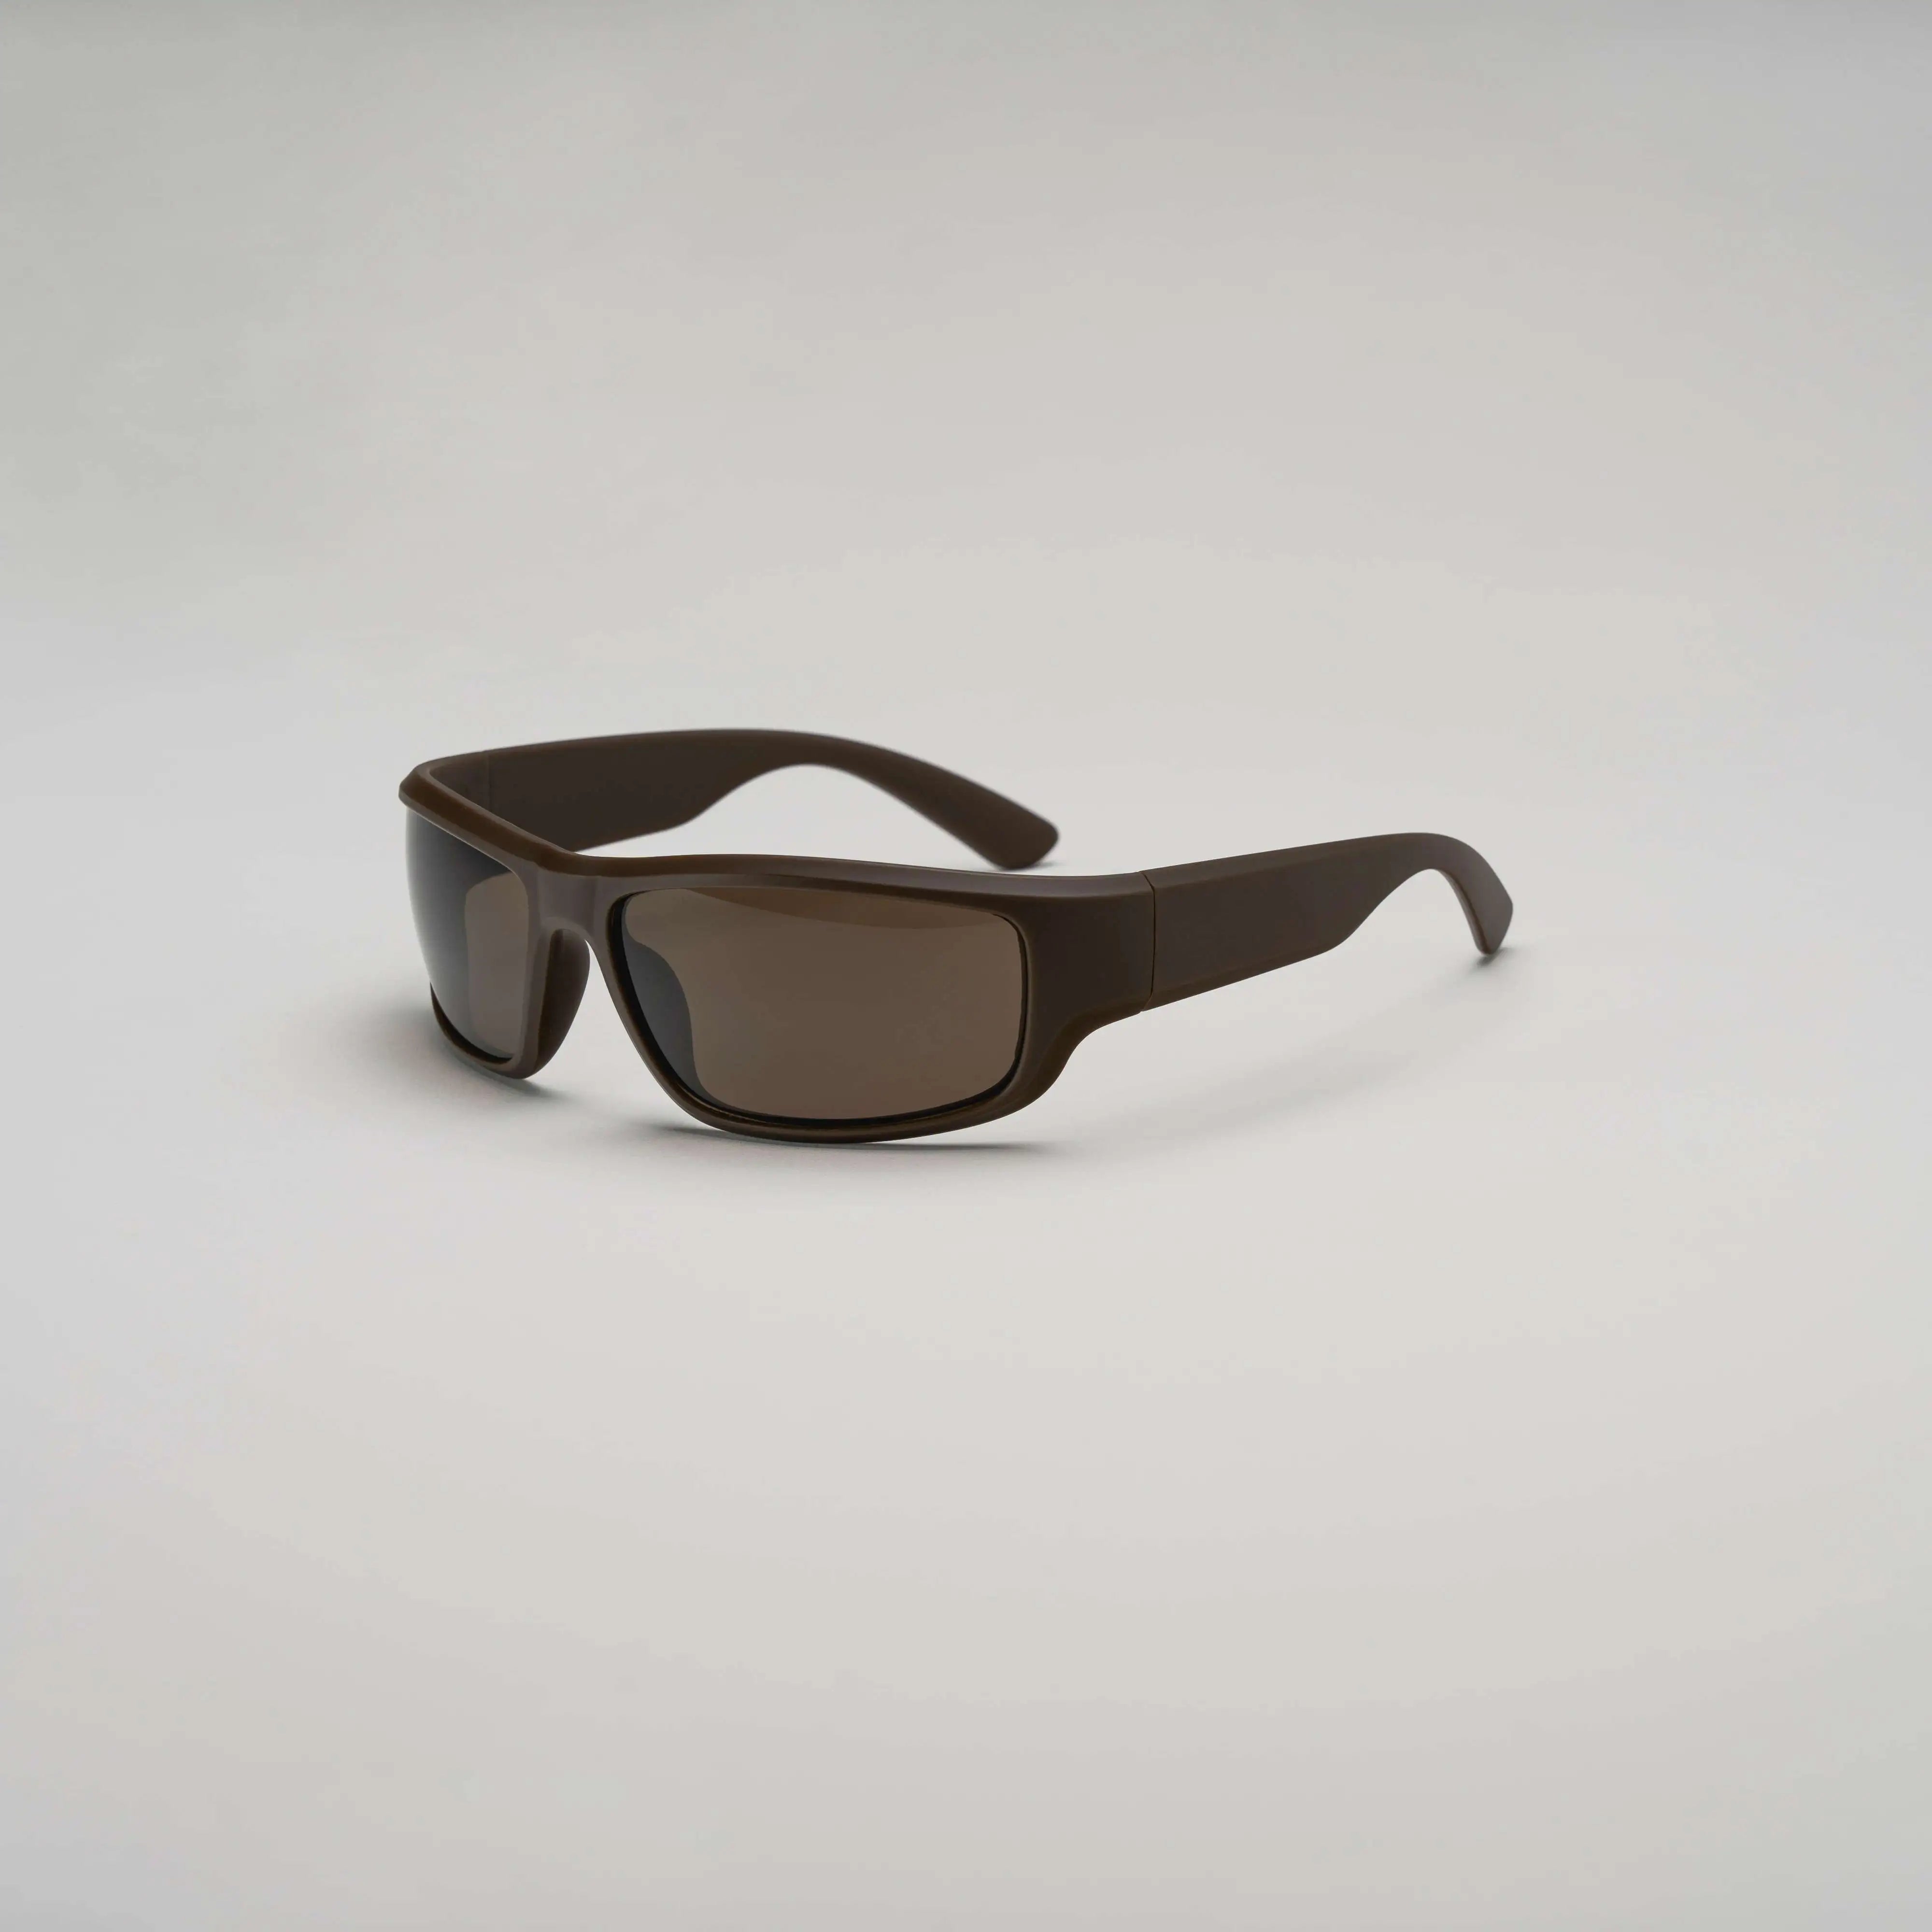 'Halcyon' Retro Wraparound Sunglasses in Brown